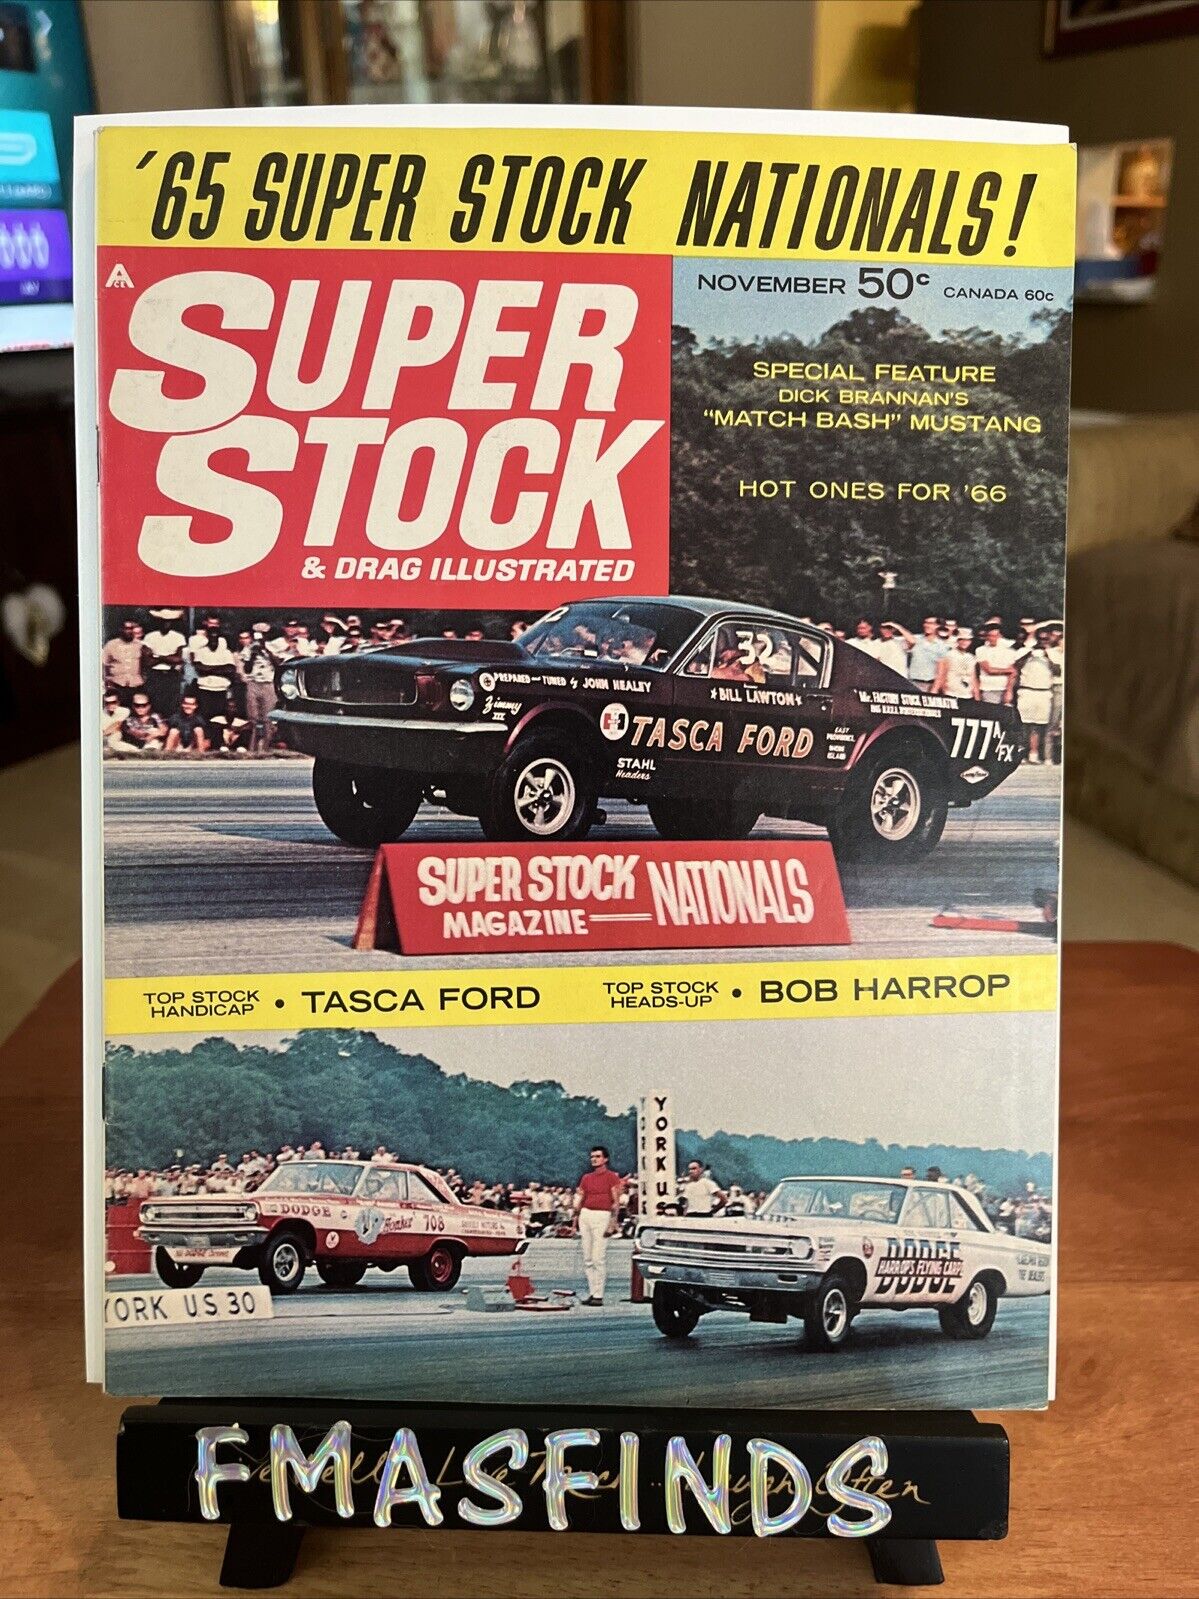 K3 1965 MUSTANG DODGE DART Super Stock Nationals Magazine TASCA FORD Drag Racing